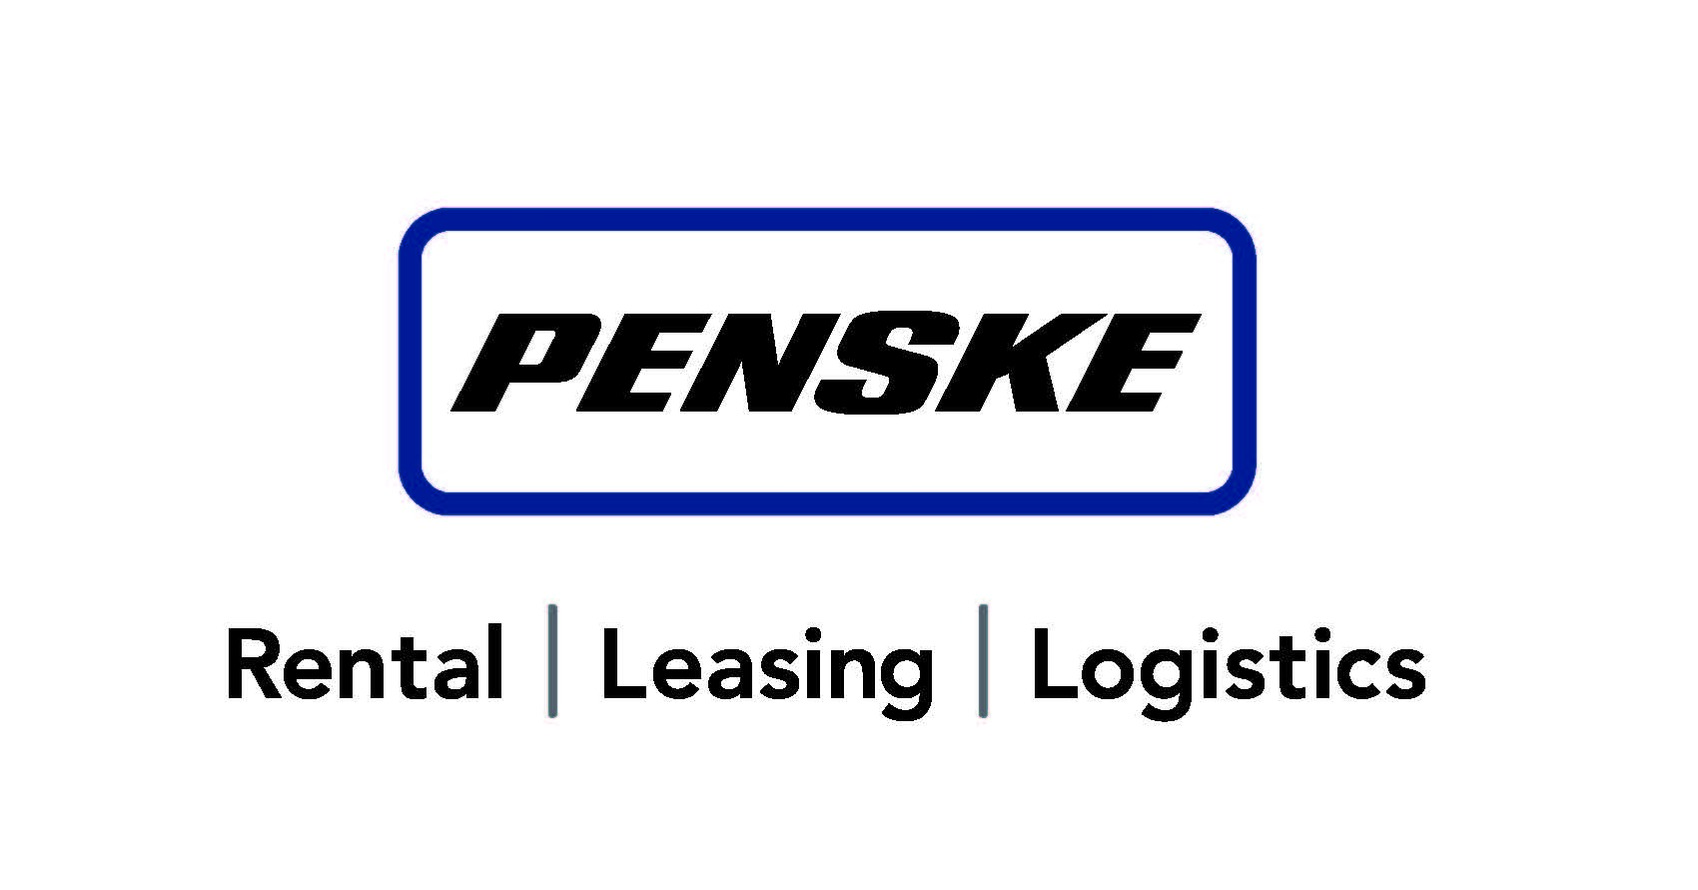 Penske Truck Rental Introduces Mobile App for Consumer Truck Rental Customers